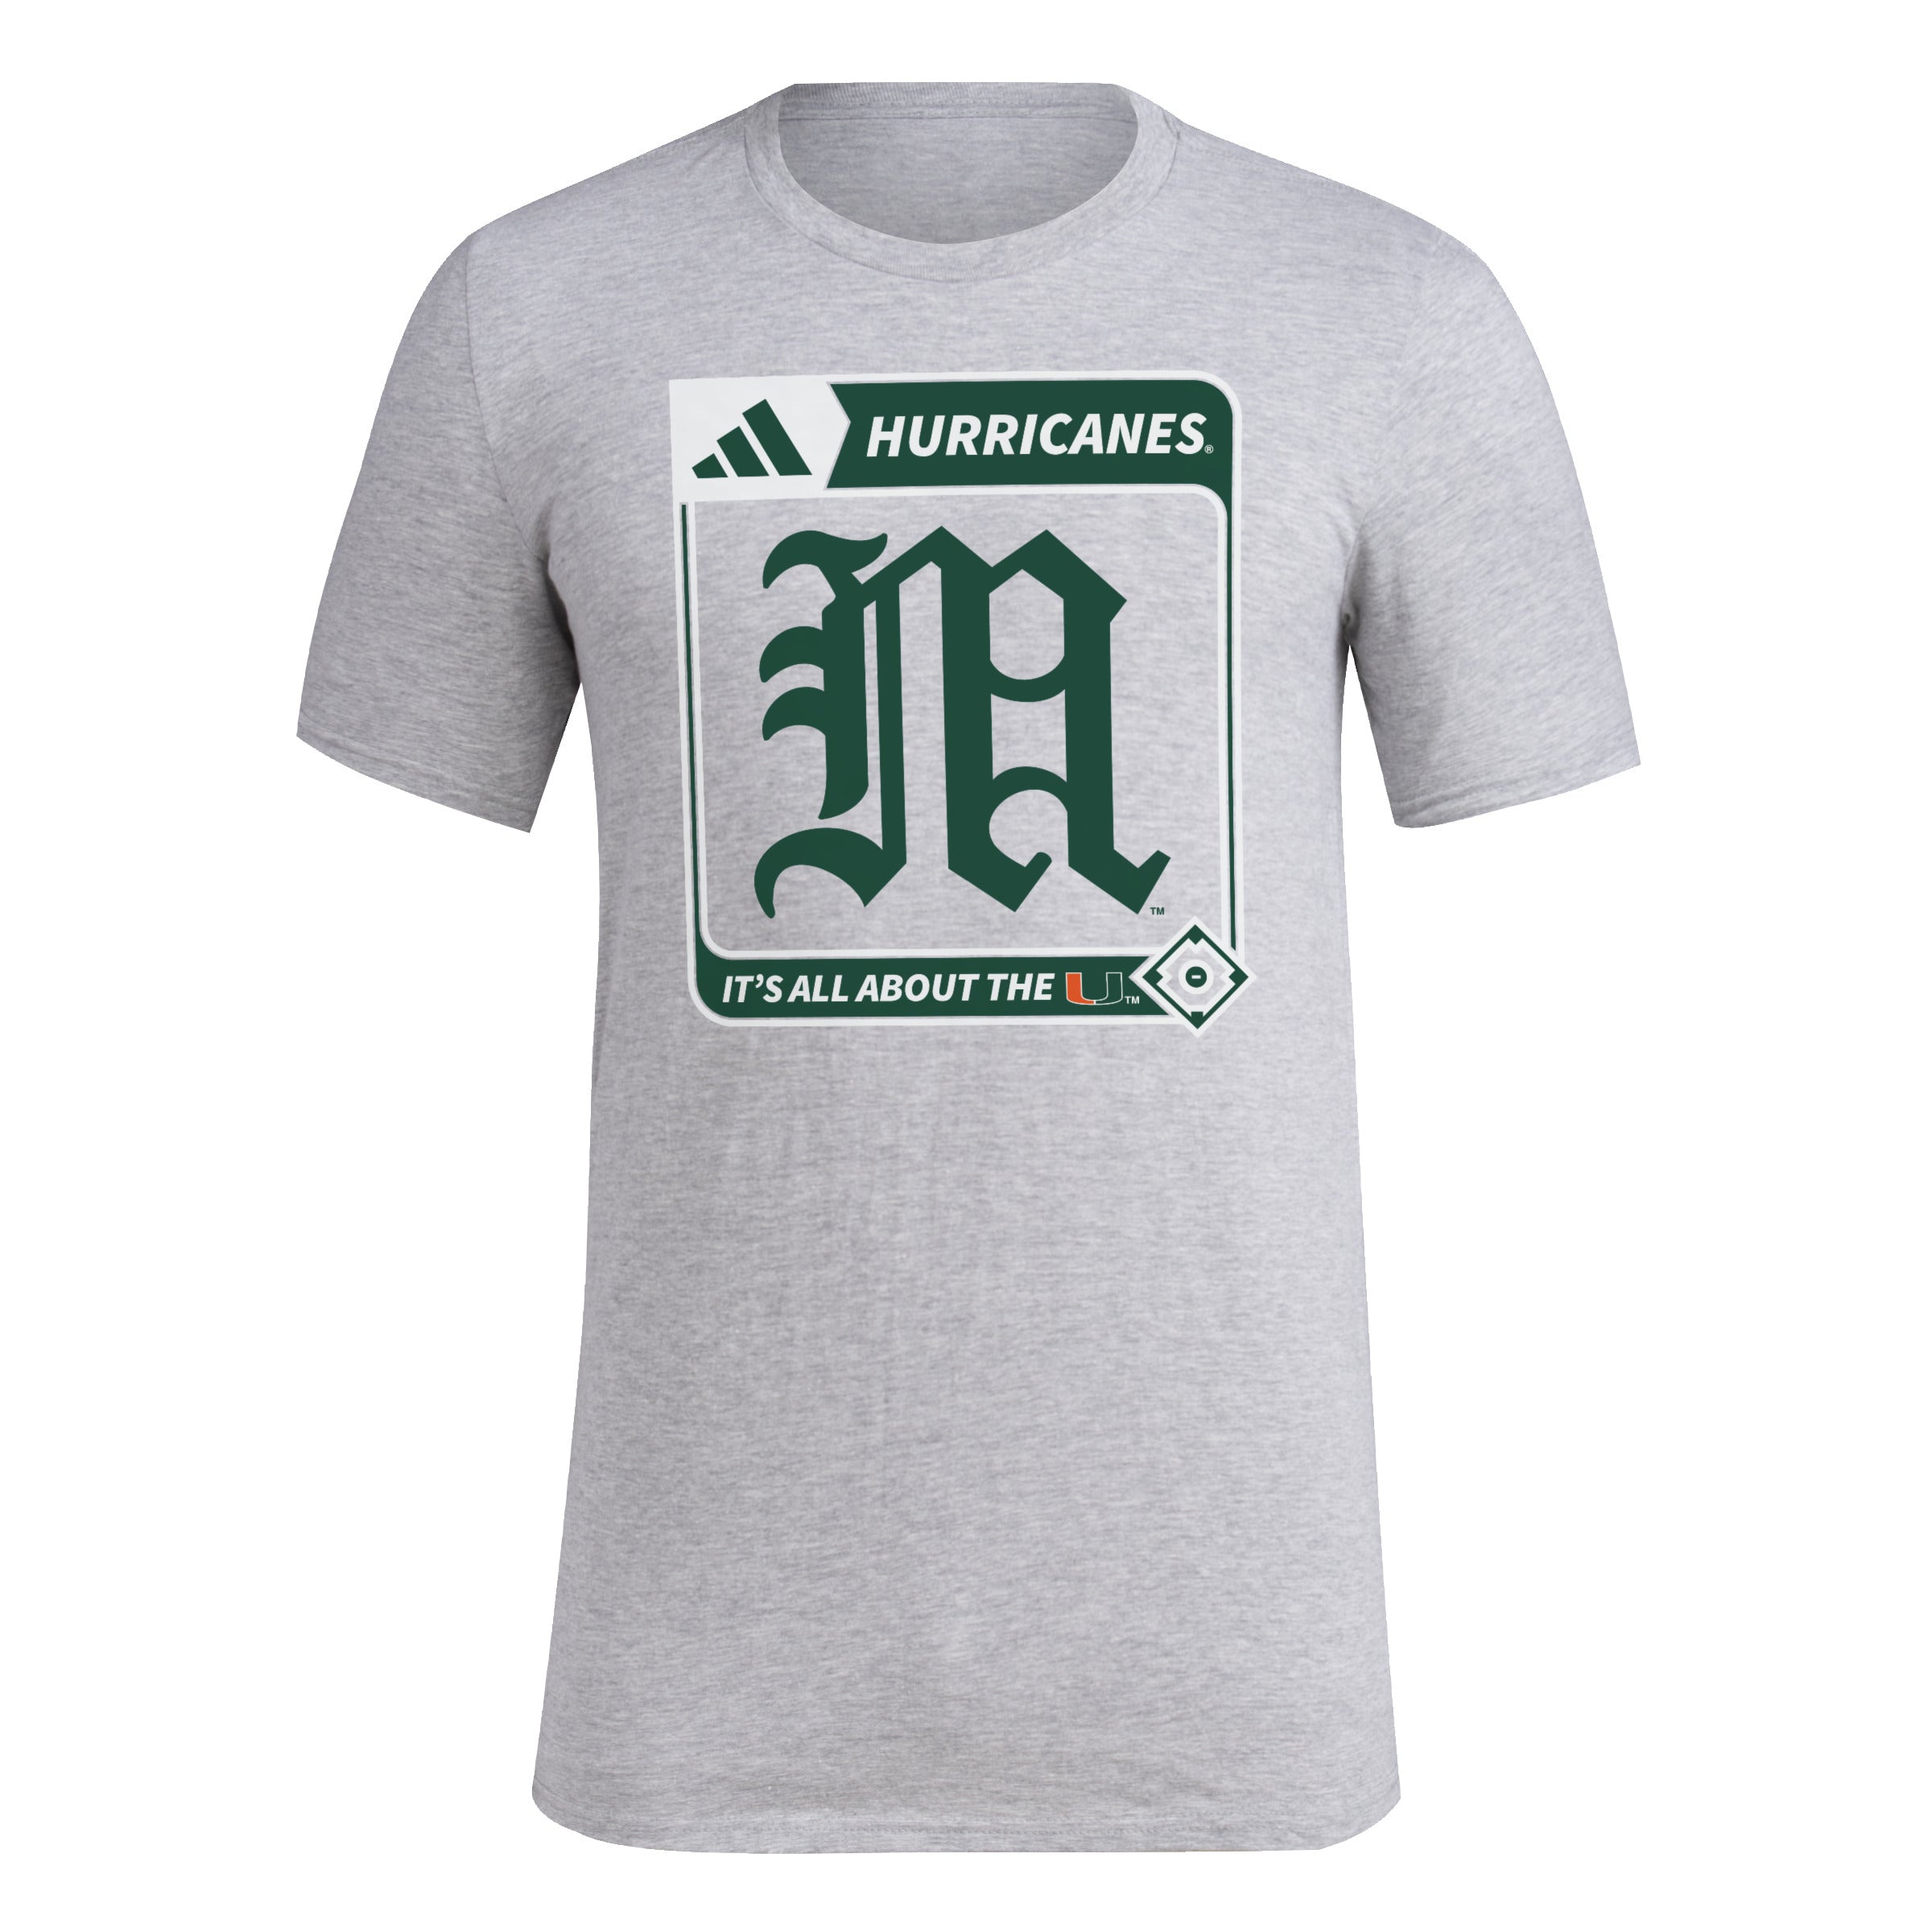 Miami Hurricanes adidas Baseball Old English M with Slogan T-Shirt - Grey